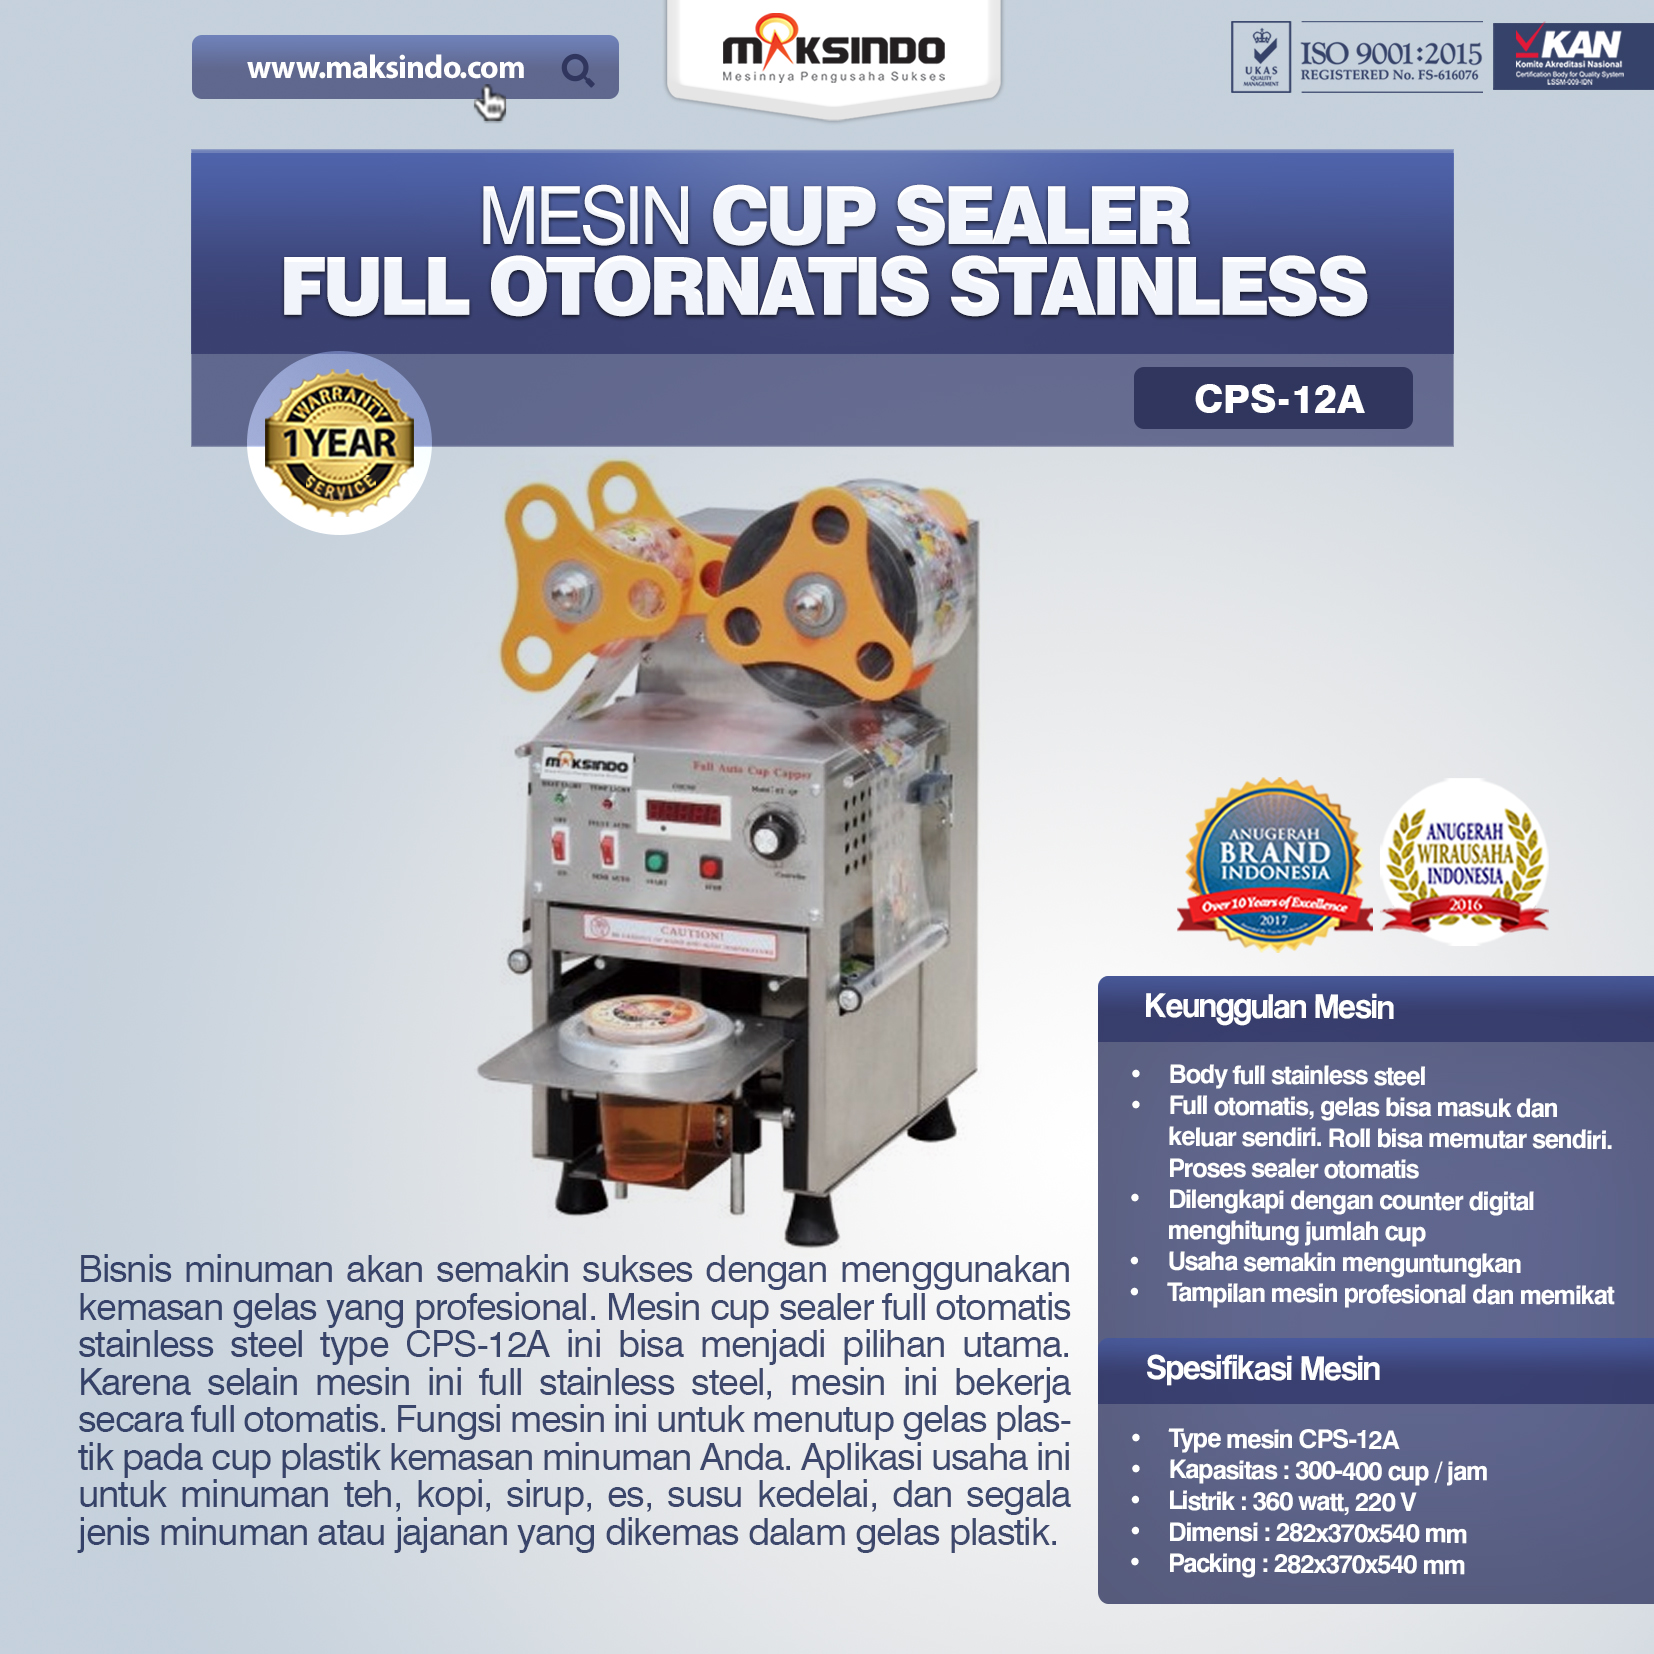 Jual Mesin Cup Sealer Full Otomatis Stainless (CPS-12A) di Palembang